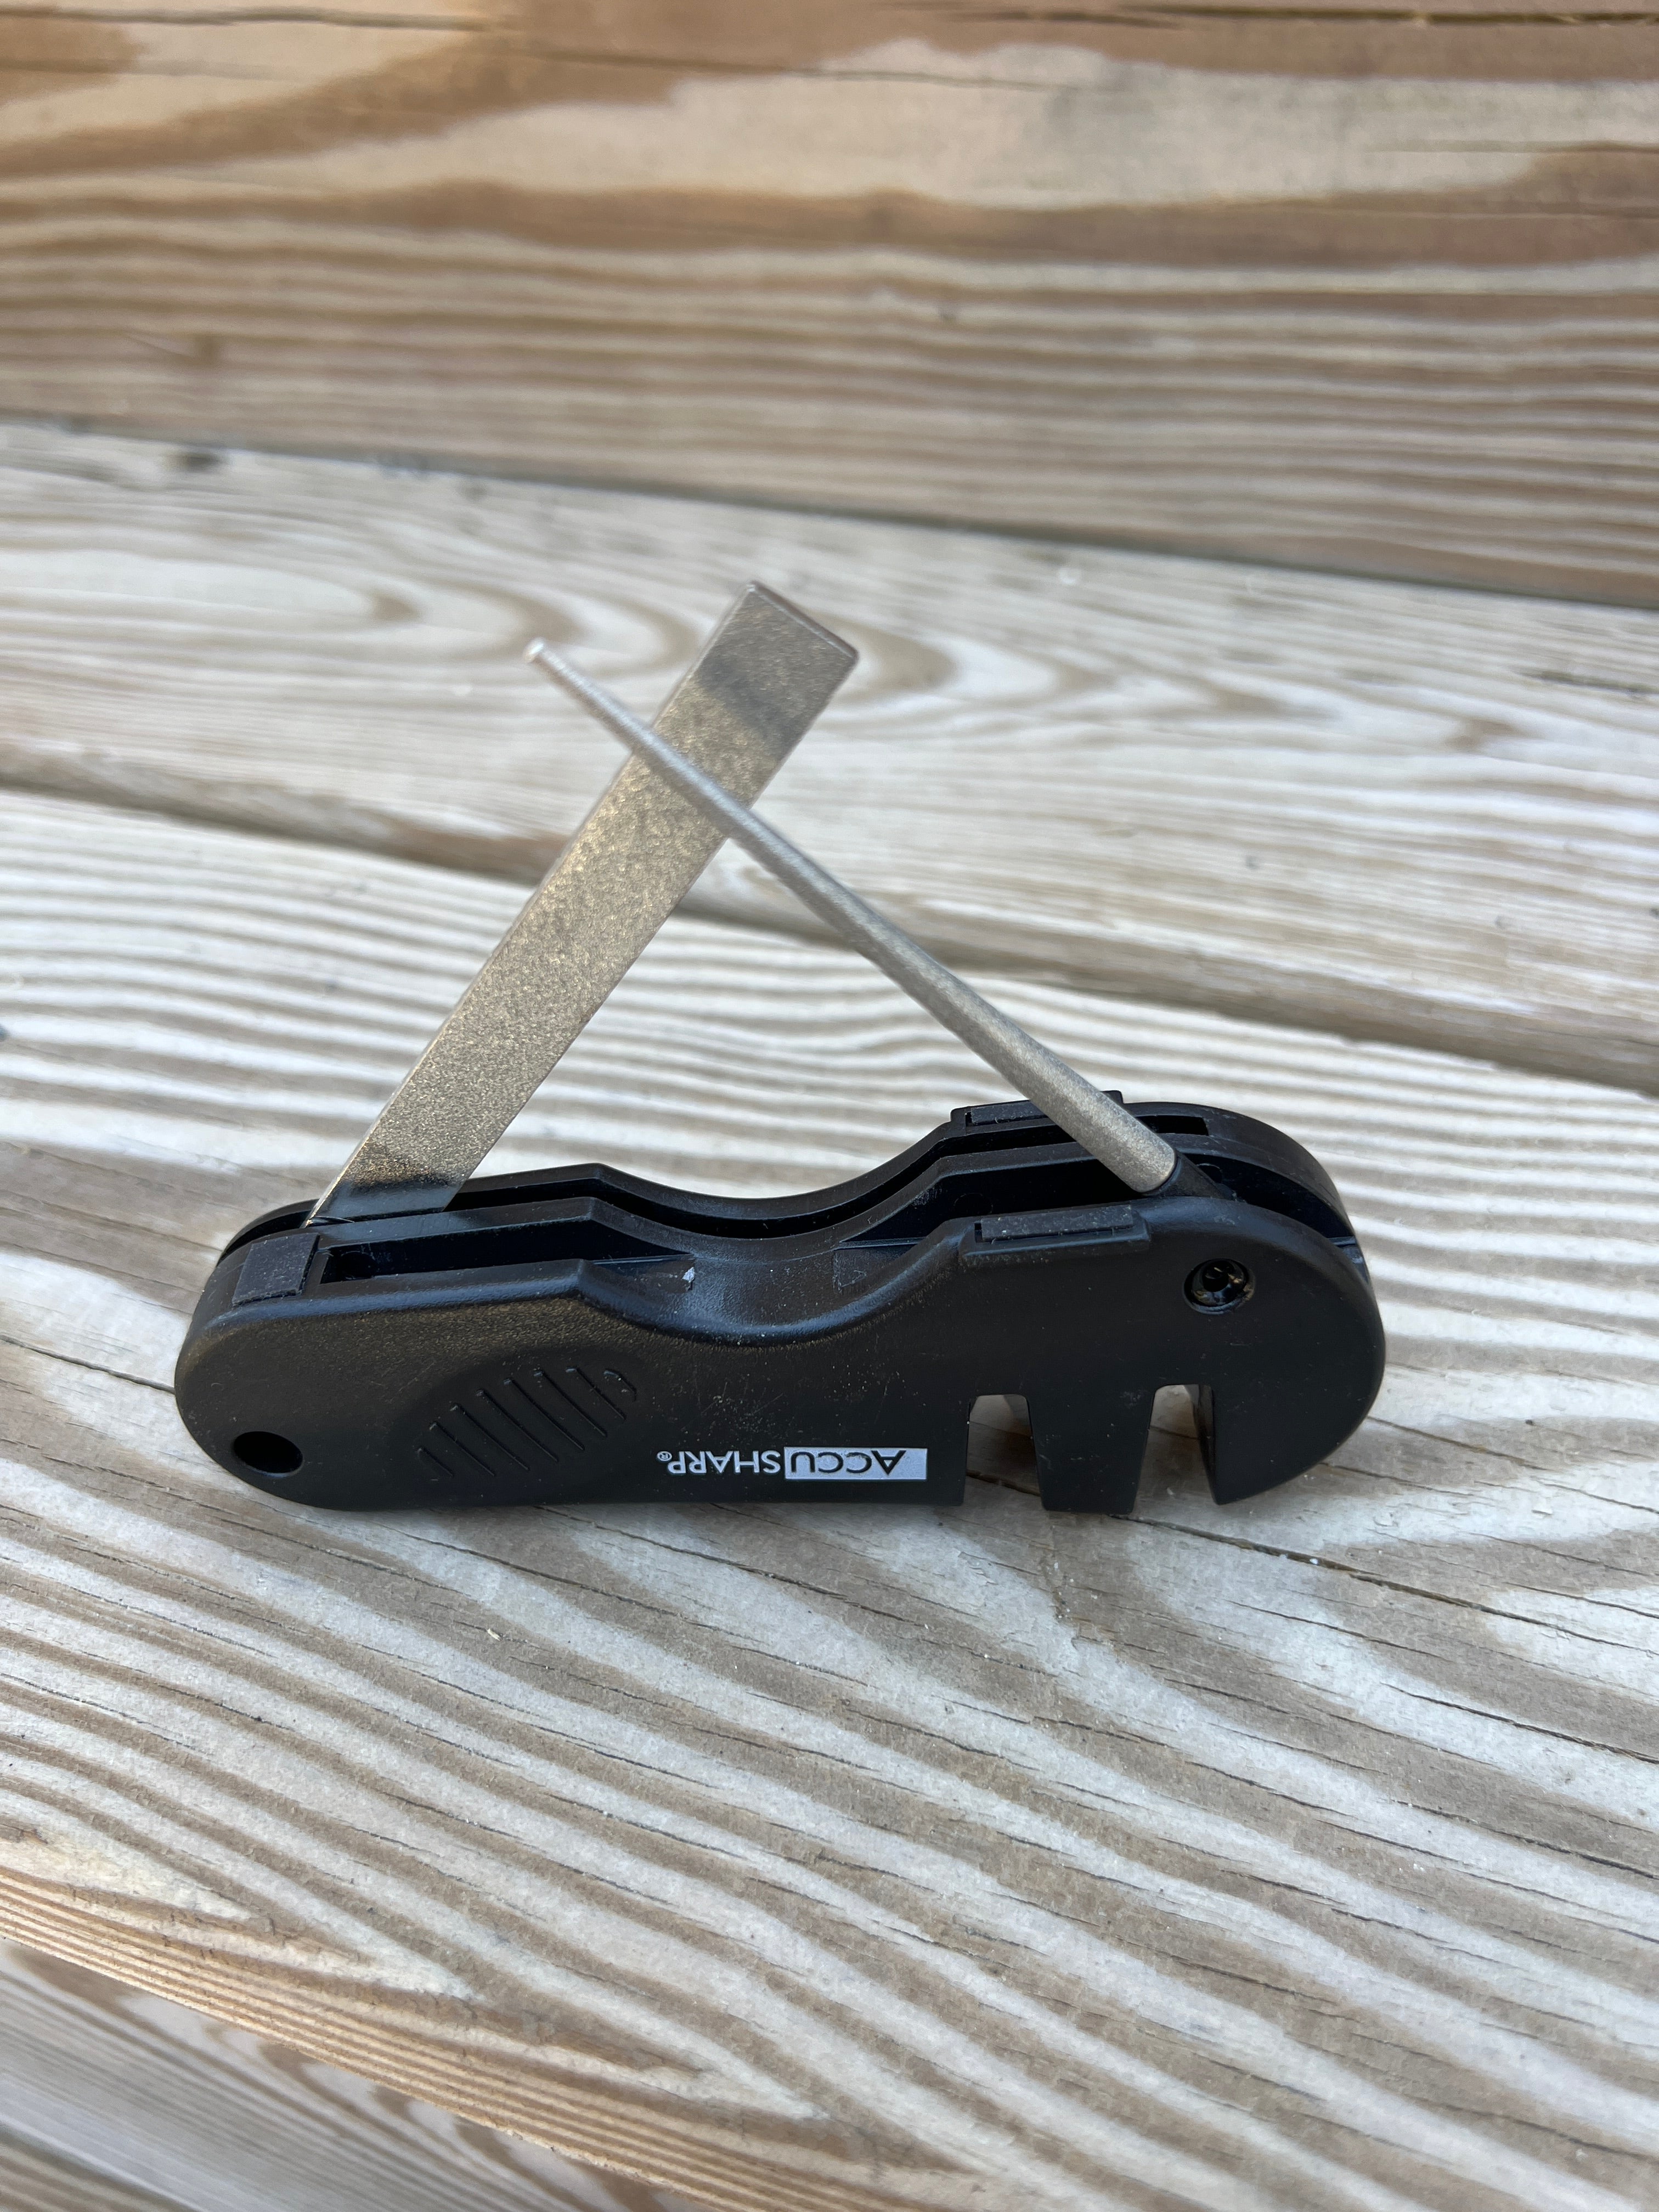 Accusharp 4-in-1 Knife & Tool Sharpener by Am Leonard